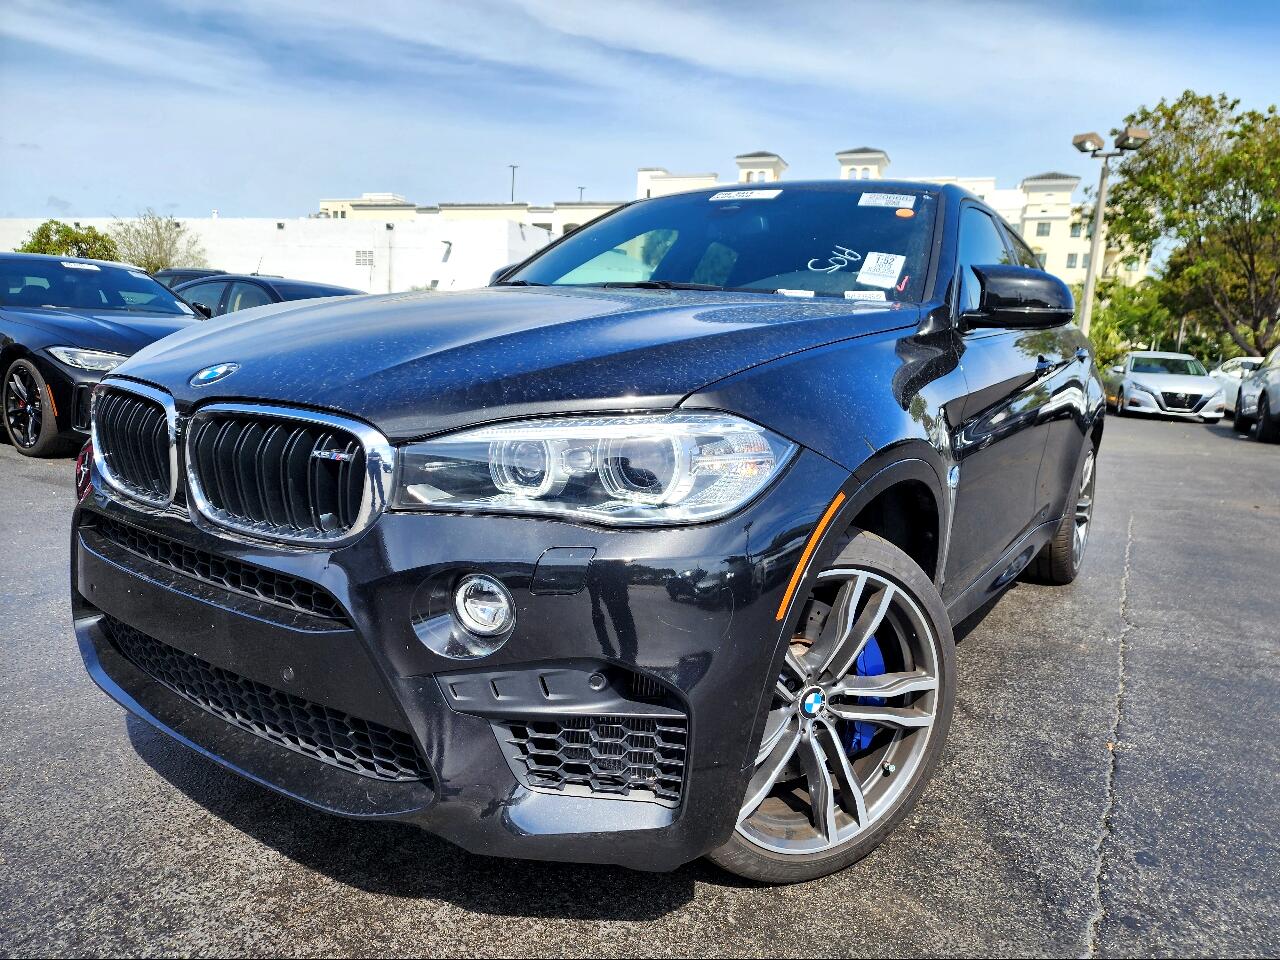 2019 BMW X6 SUV / Crossover - $56,999